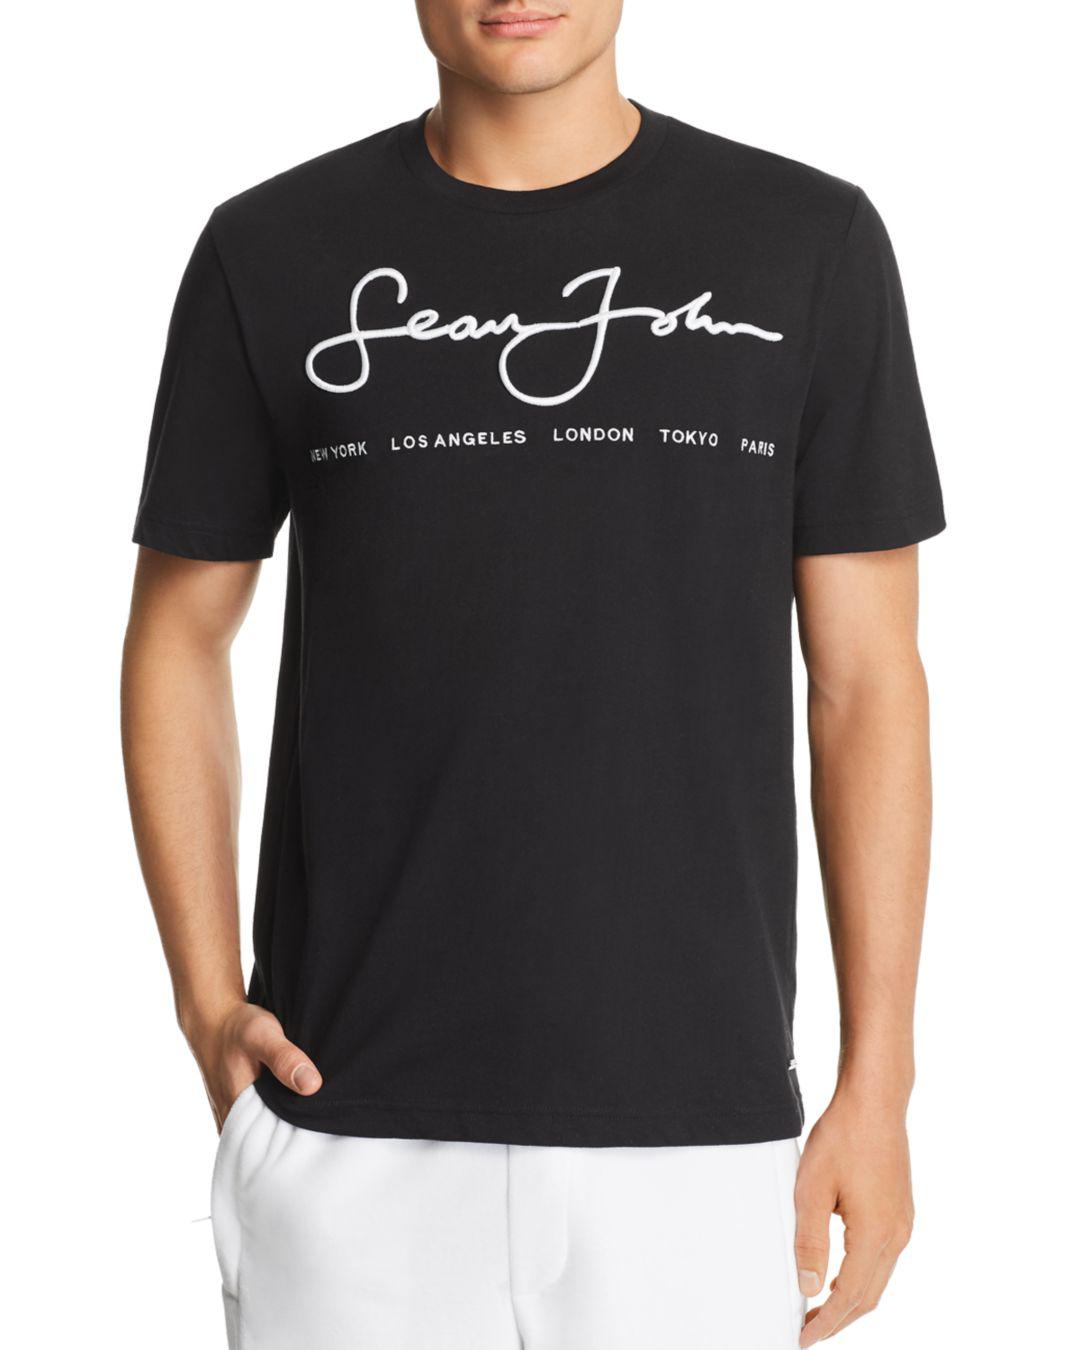 Sean John Unisex-Adult Signature Script Tee T-Shirt Fast shipping and ...